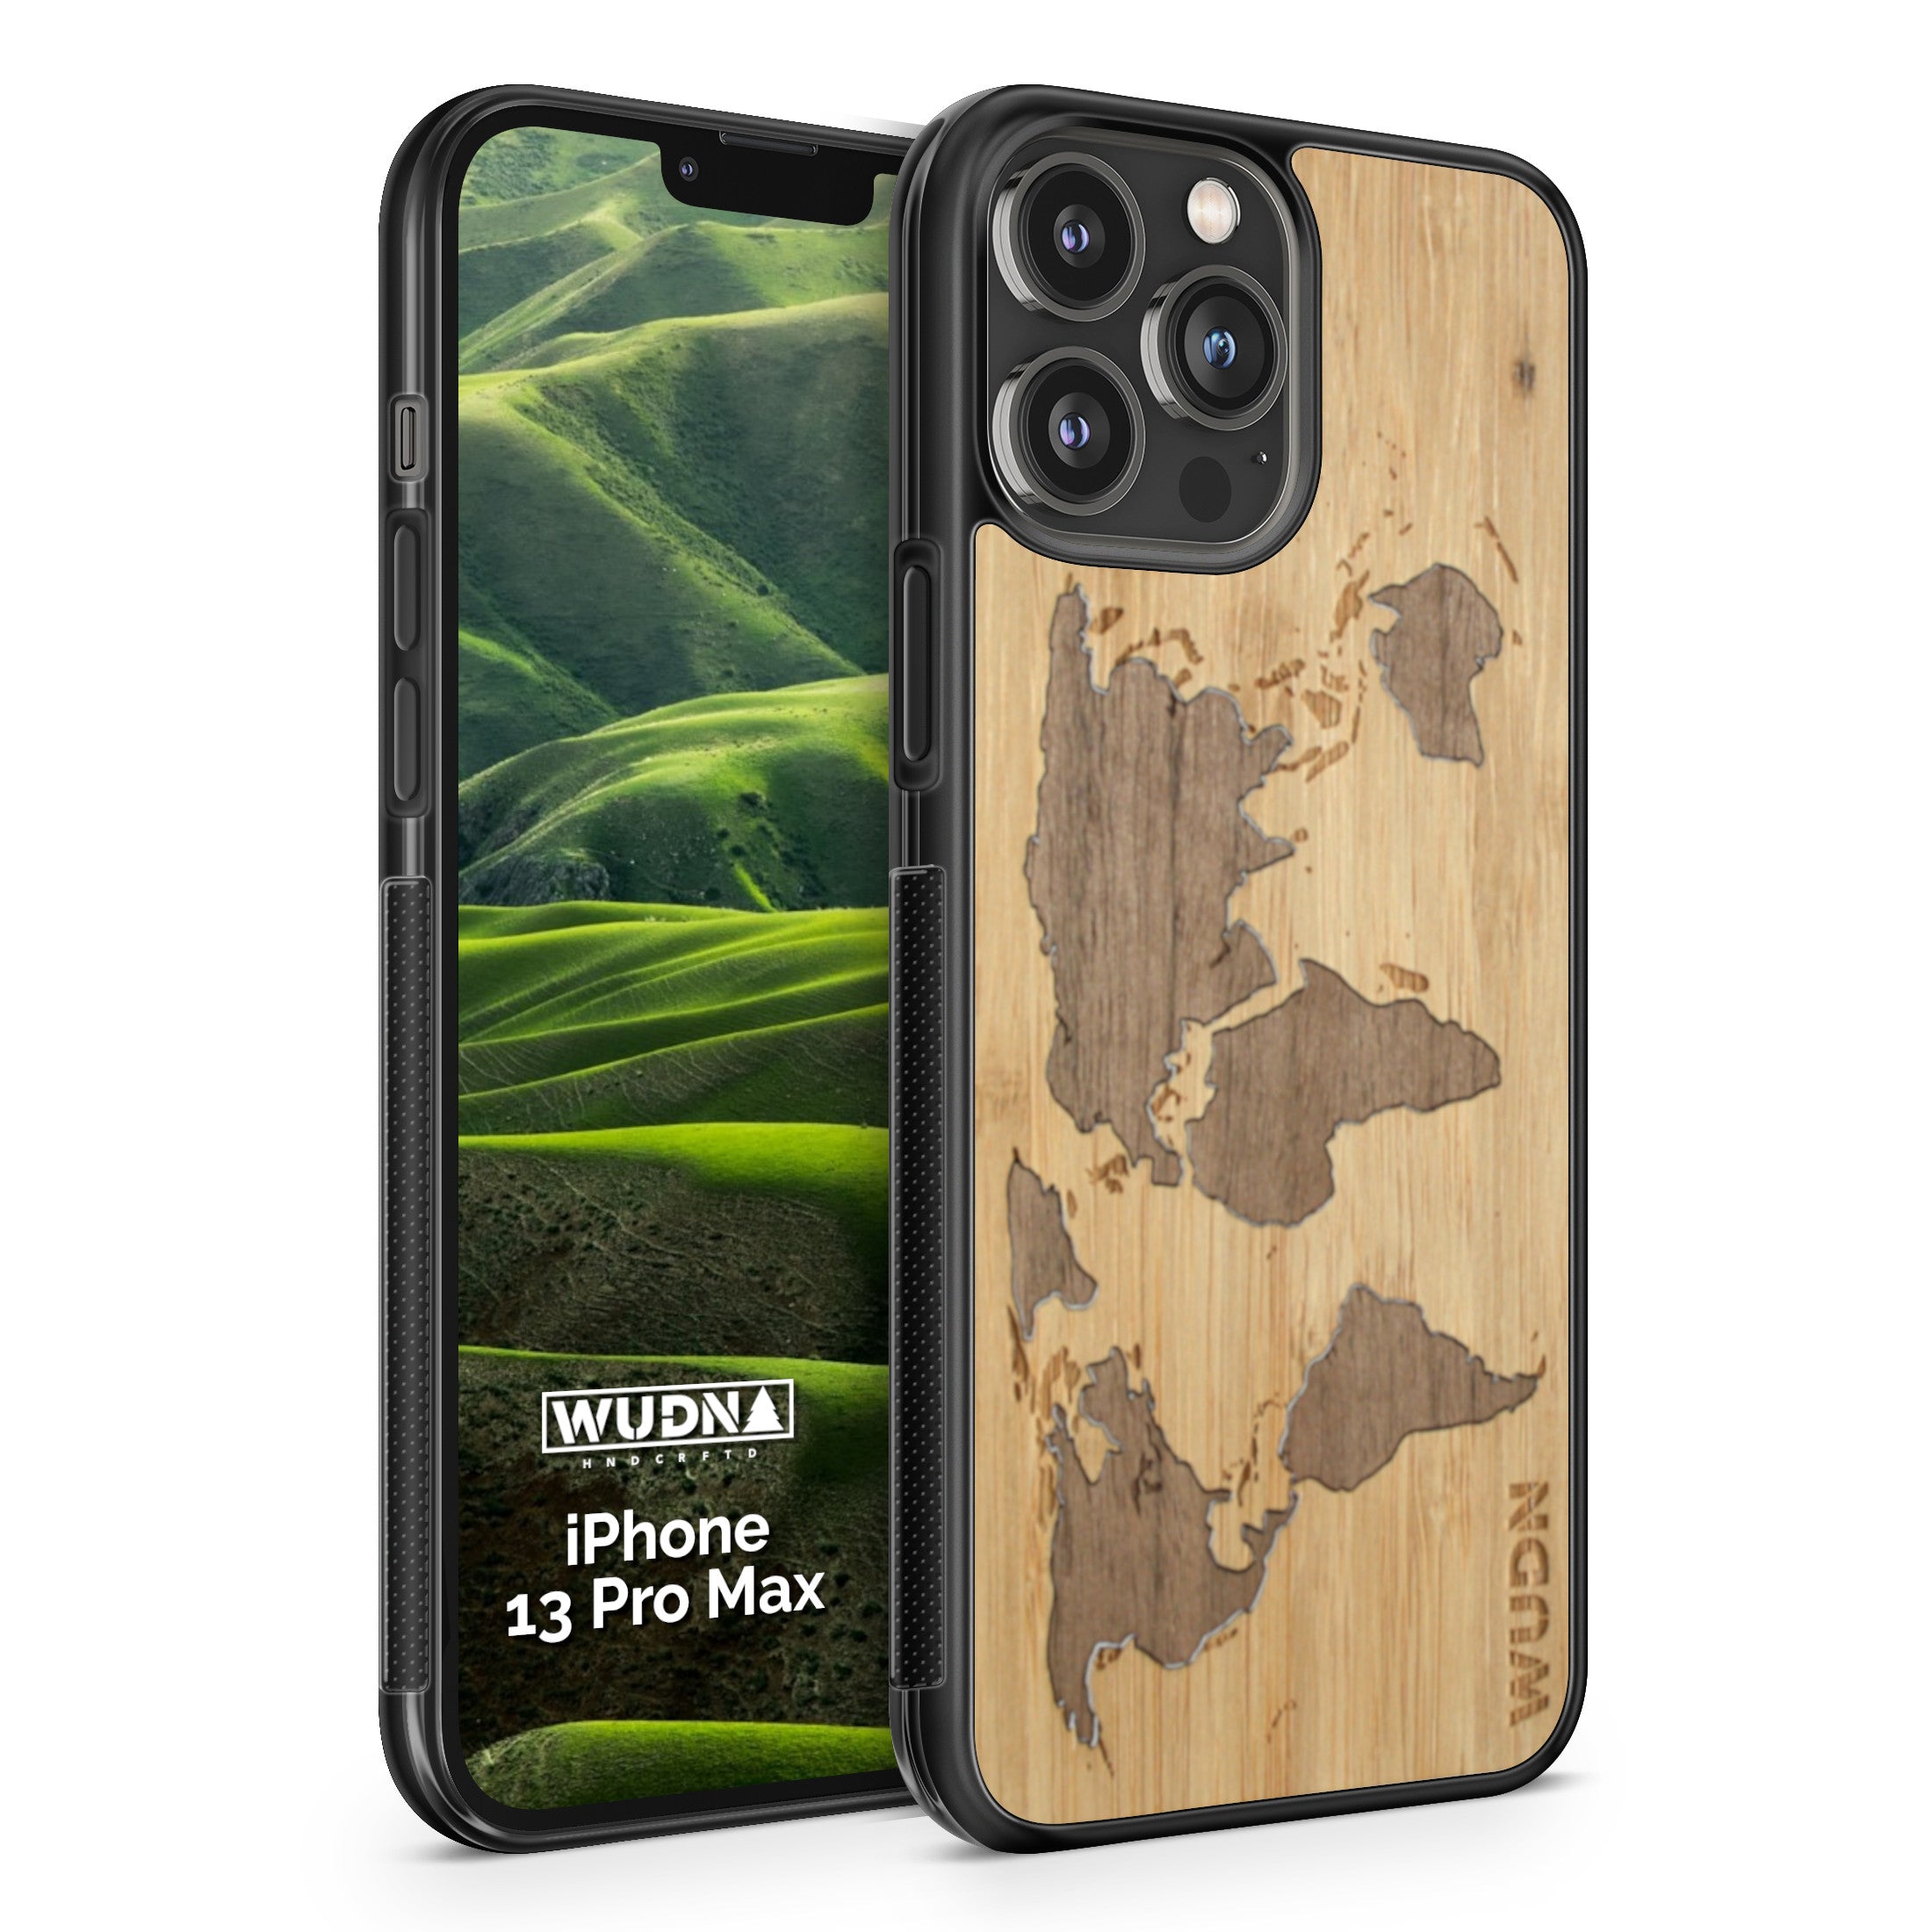 Slim Wooden Phone Case (World Map Traveler - Bamboo Ocean)